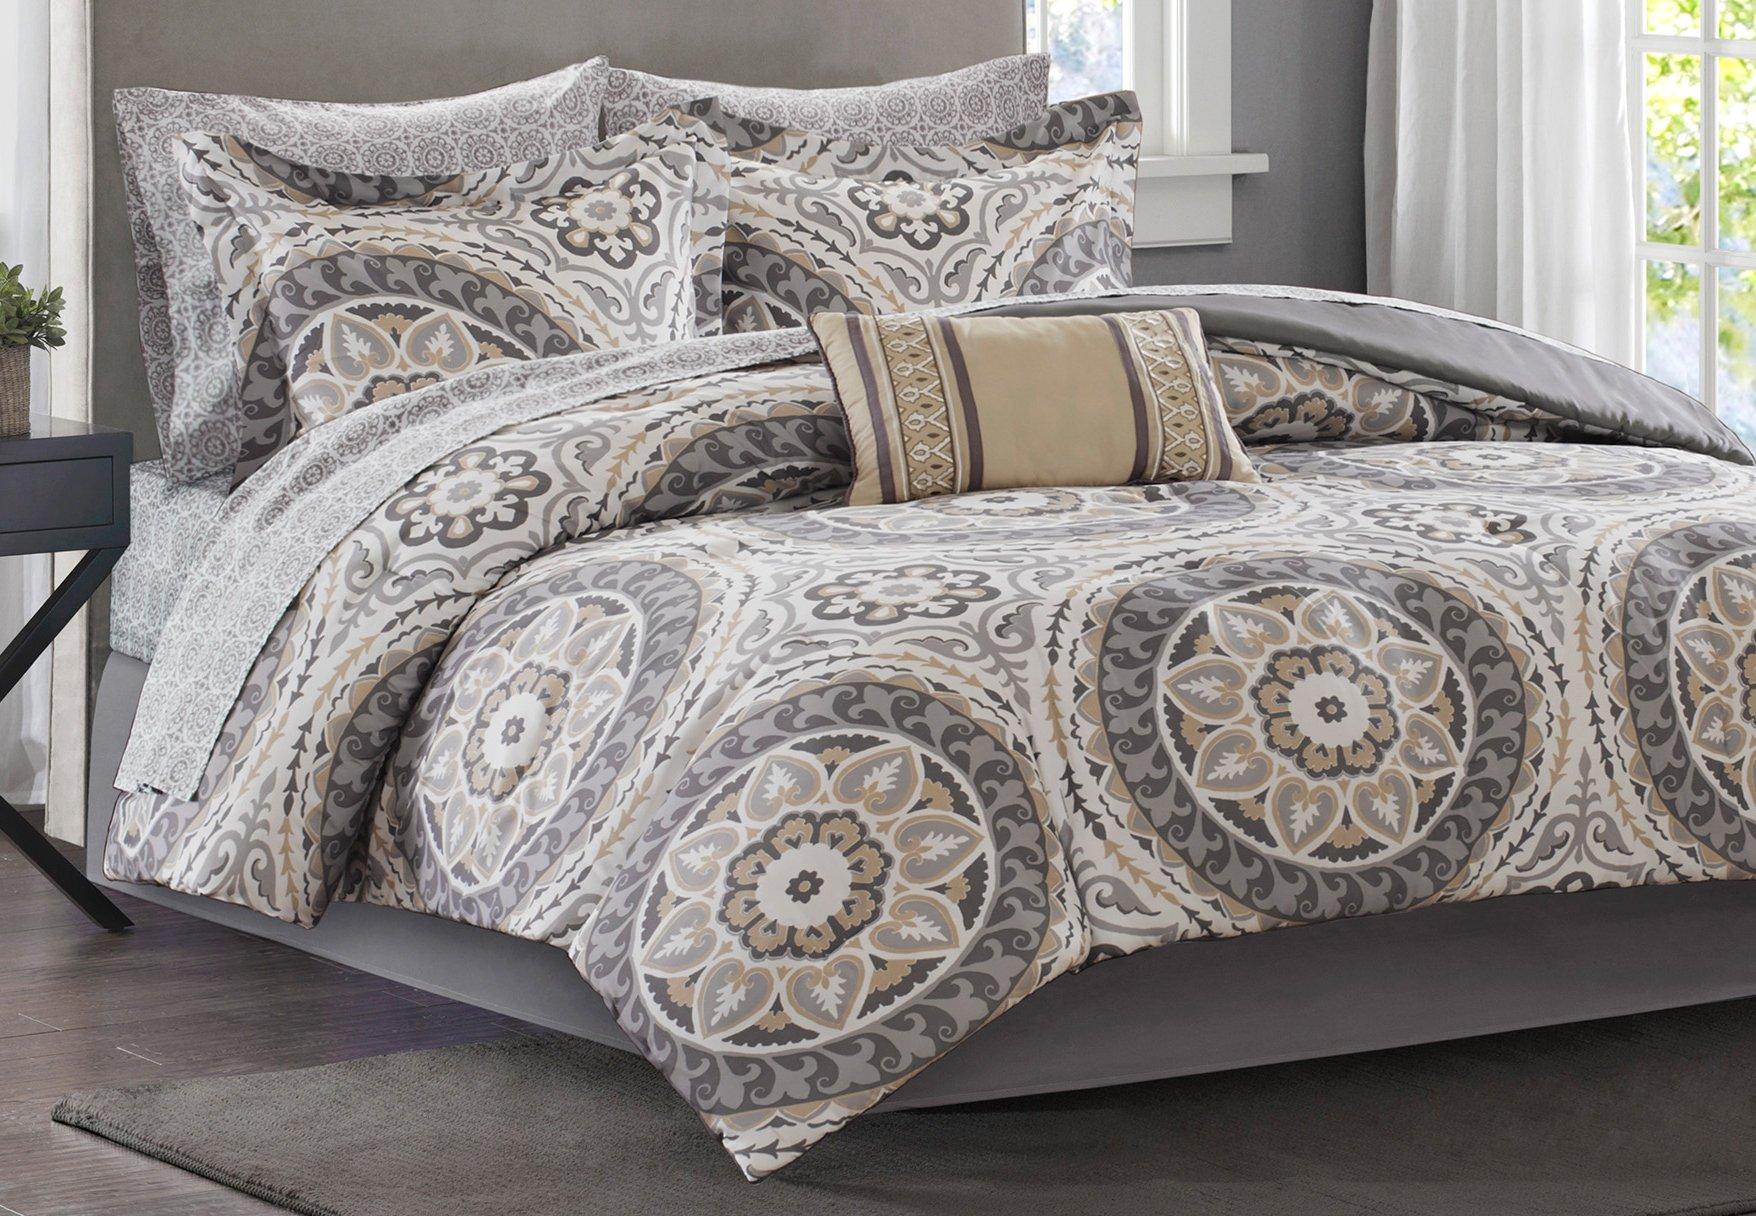 Serenity Taupe Comforter & Sheet Set